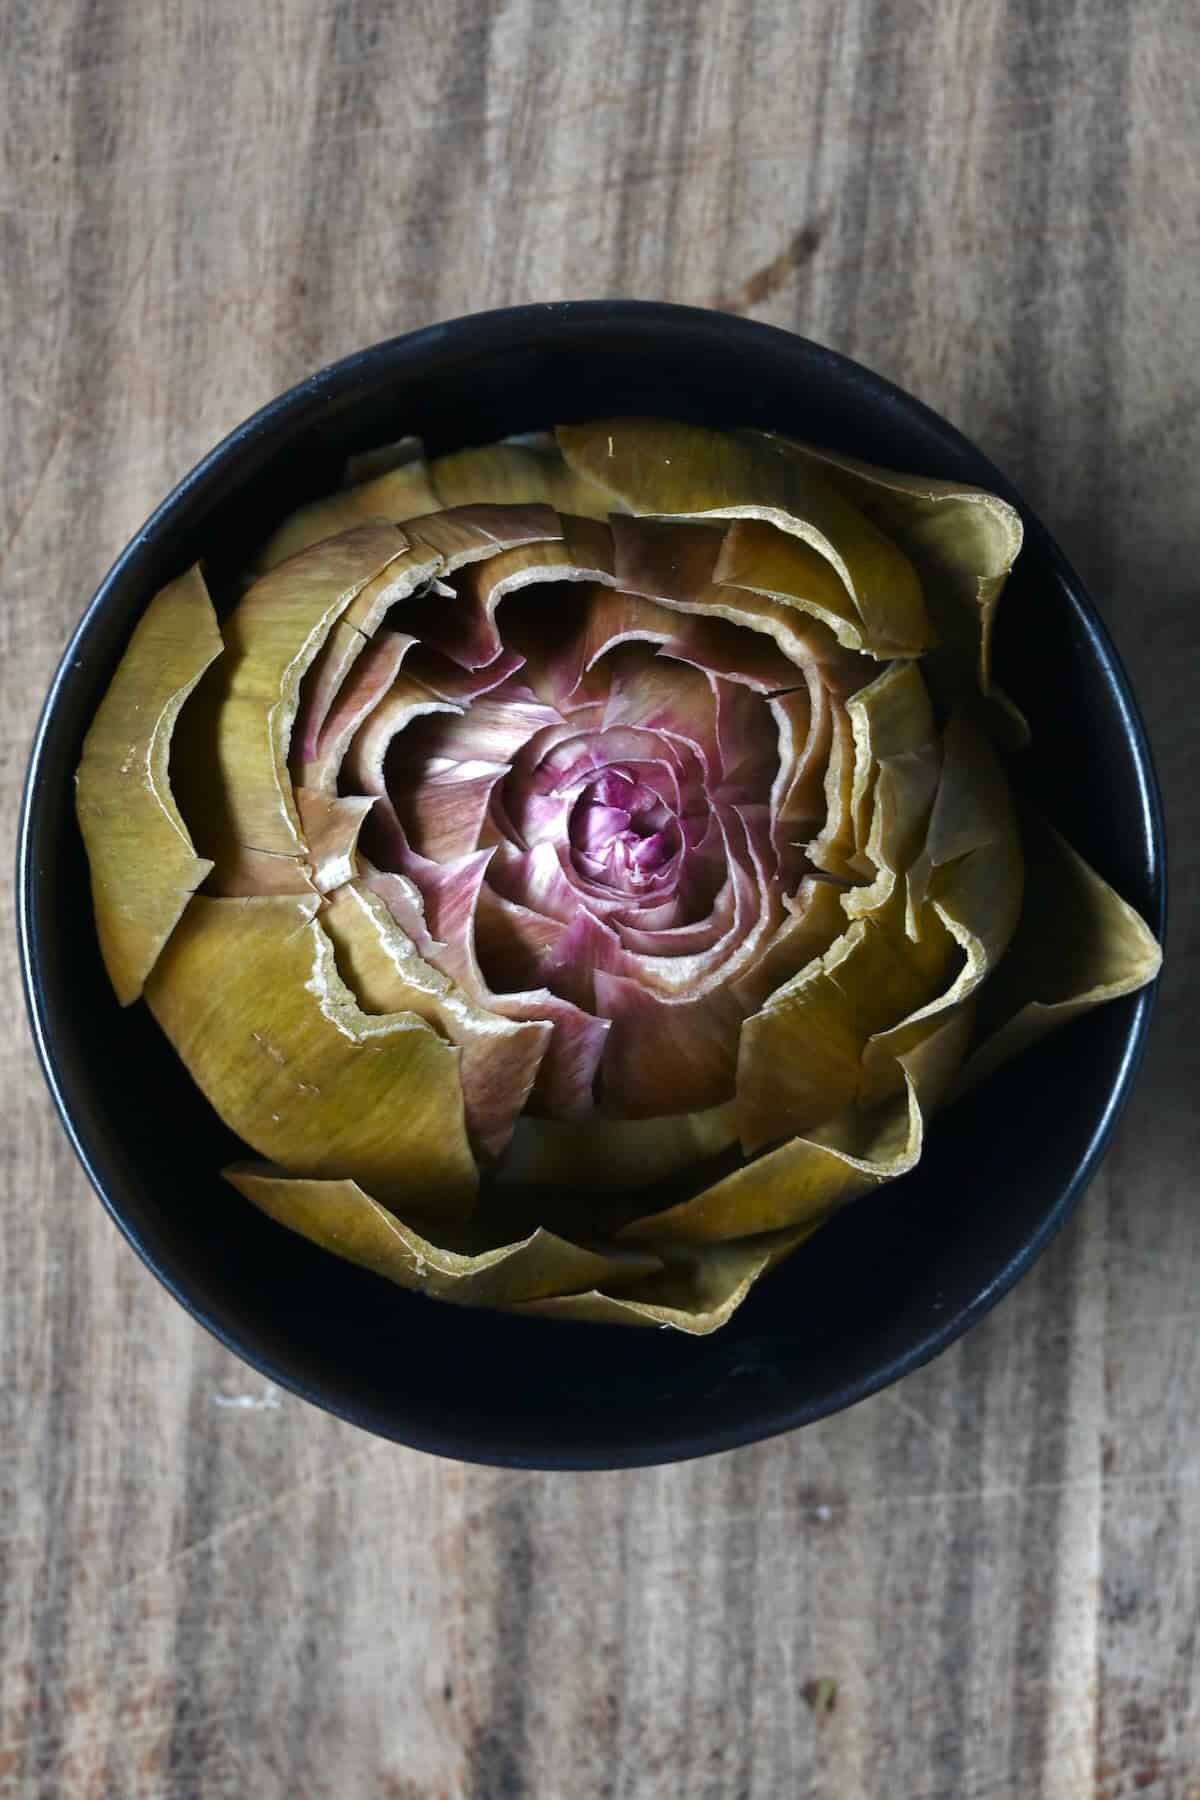 Steamed artichoke in a small bowl